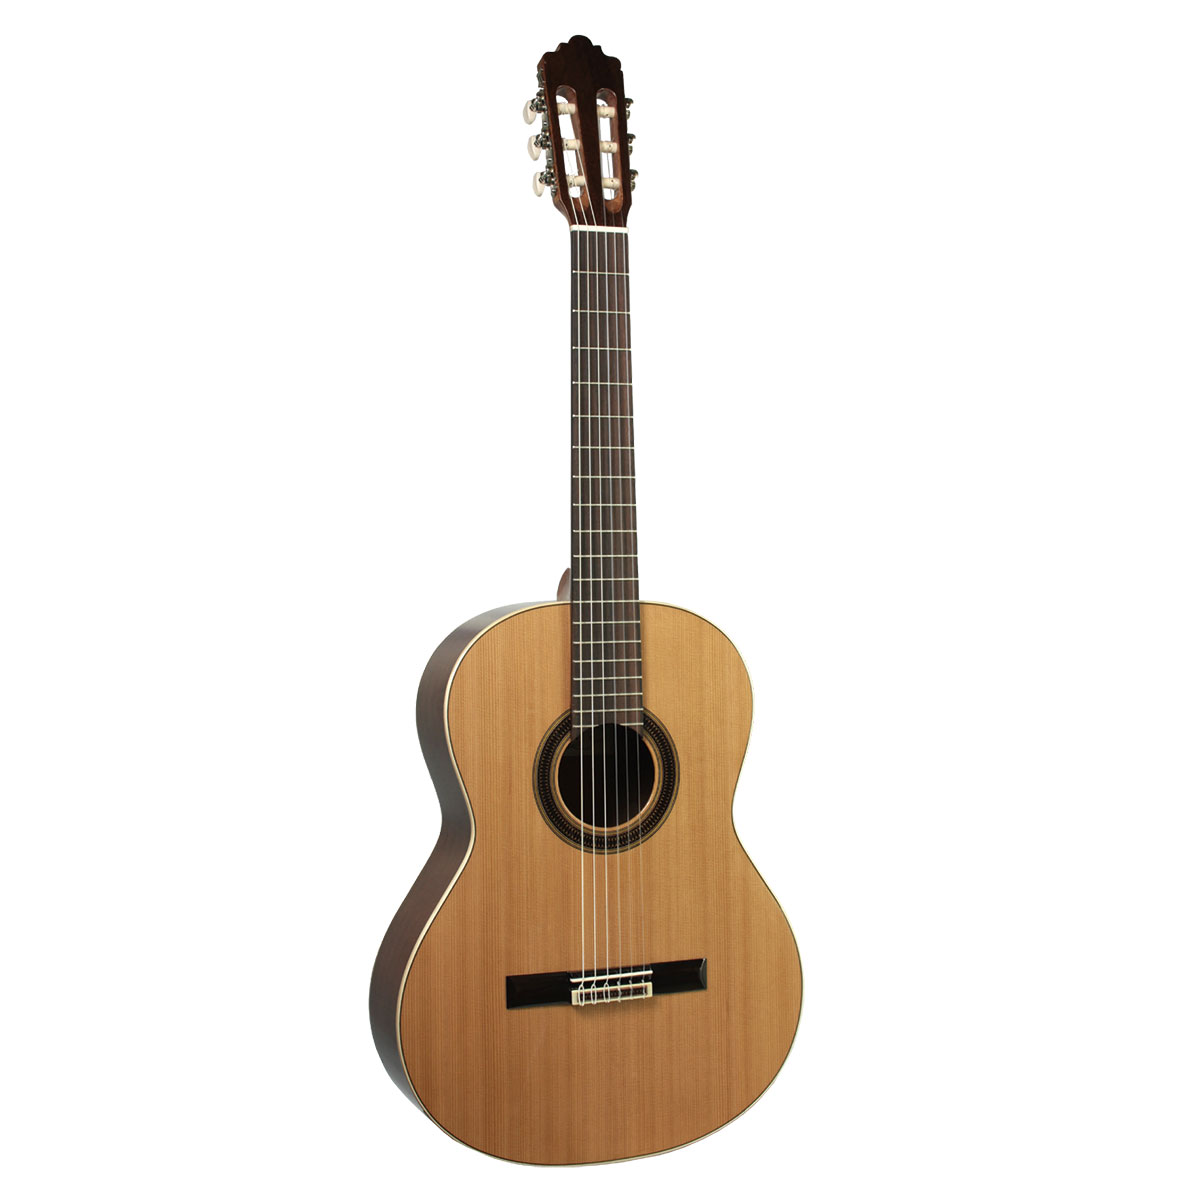 ARANJUEZ 505SC 650mm クラシックギター 【アランフェス】島村楽器オリジナルモデル